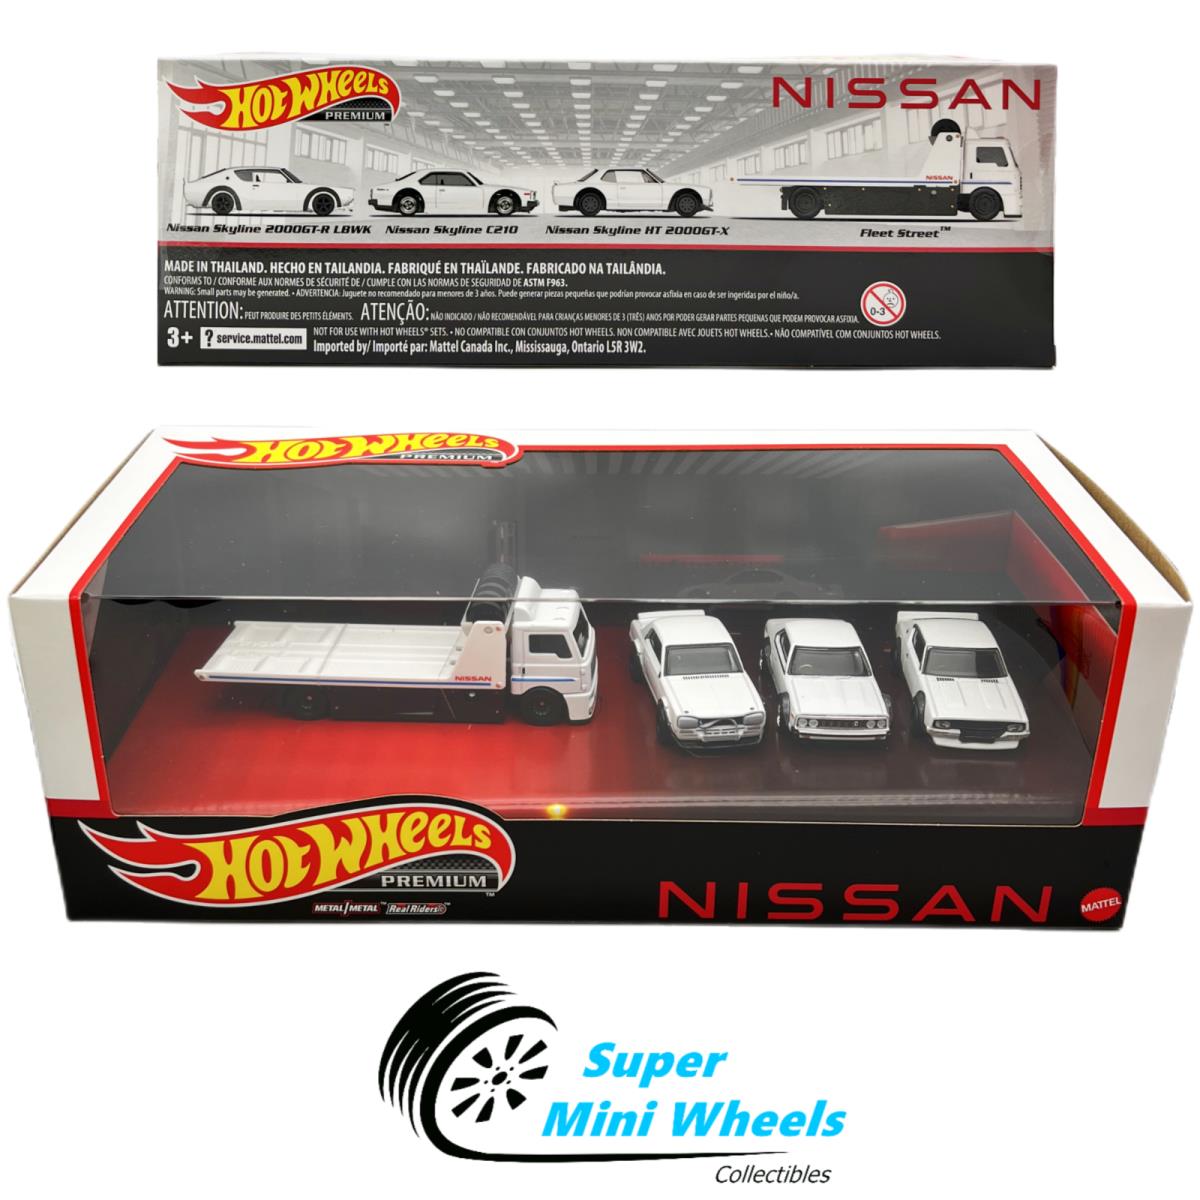 2023 Hot Wheels Premium Nissan Team Set 4 Cars Garage Box Walmart Limited